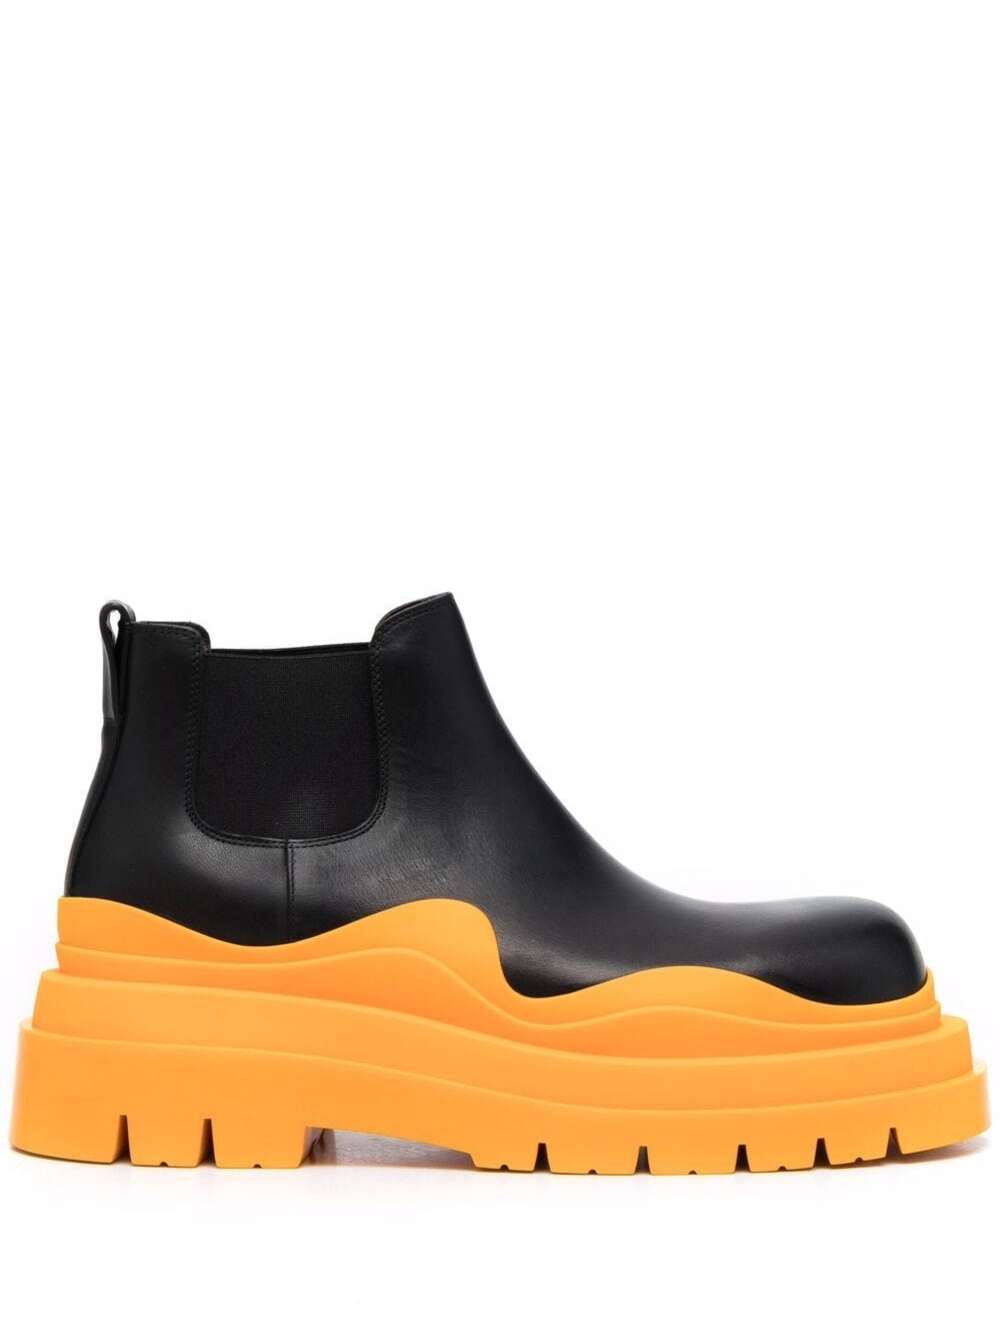 Bottega Veneta Black Leather Tire Ankle Boots With Orange Rubber Outsole